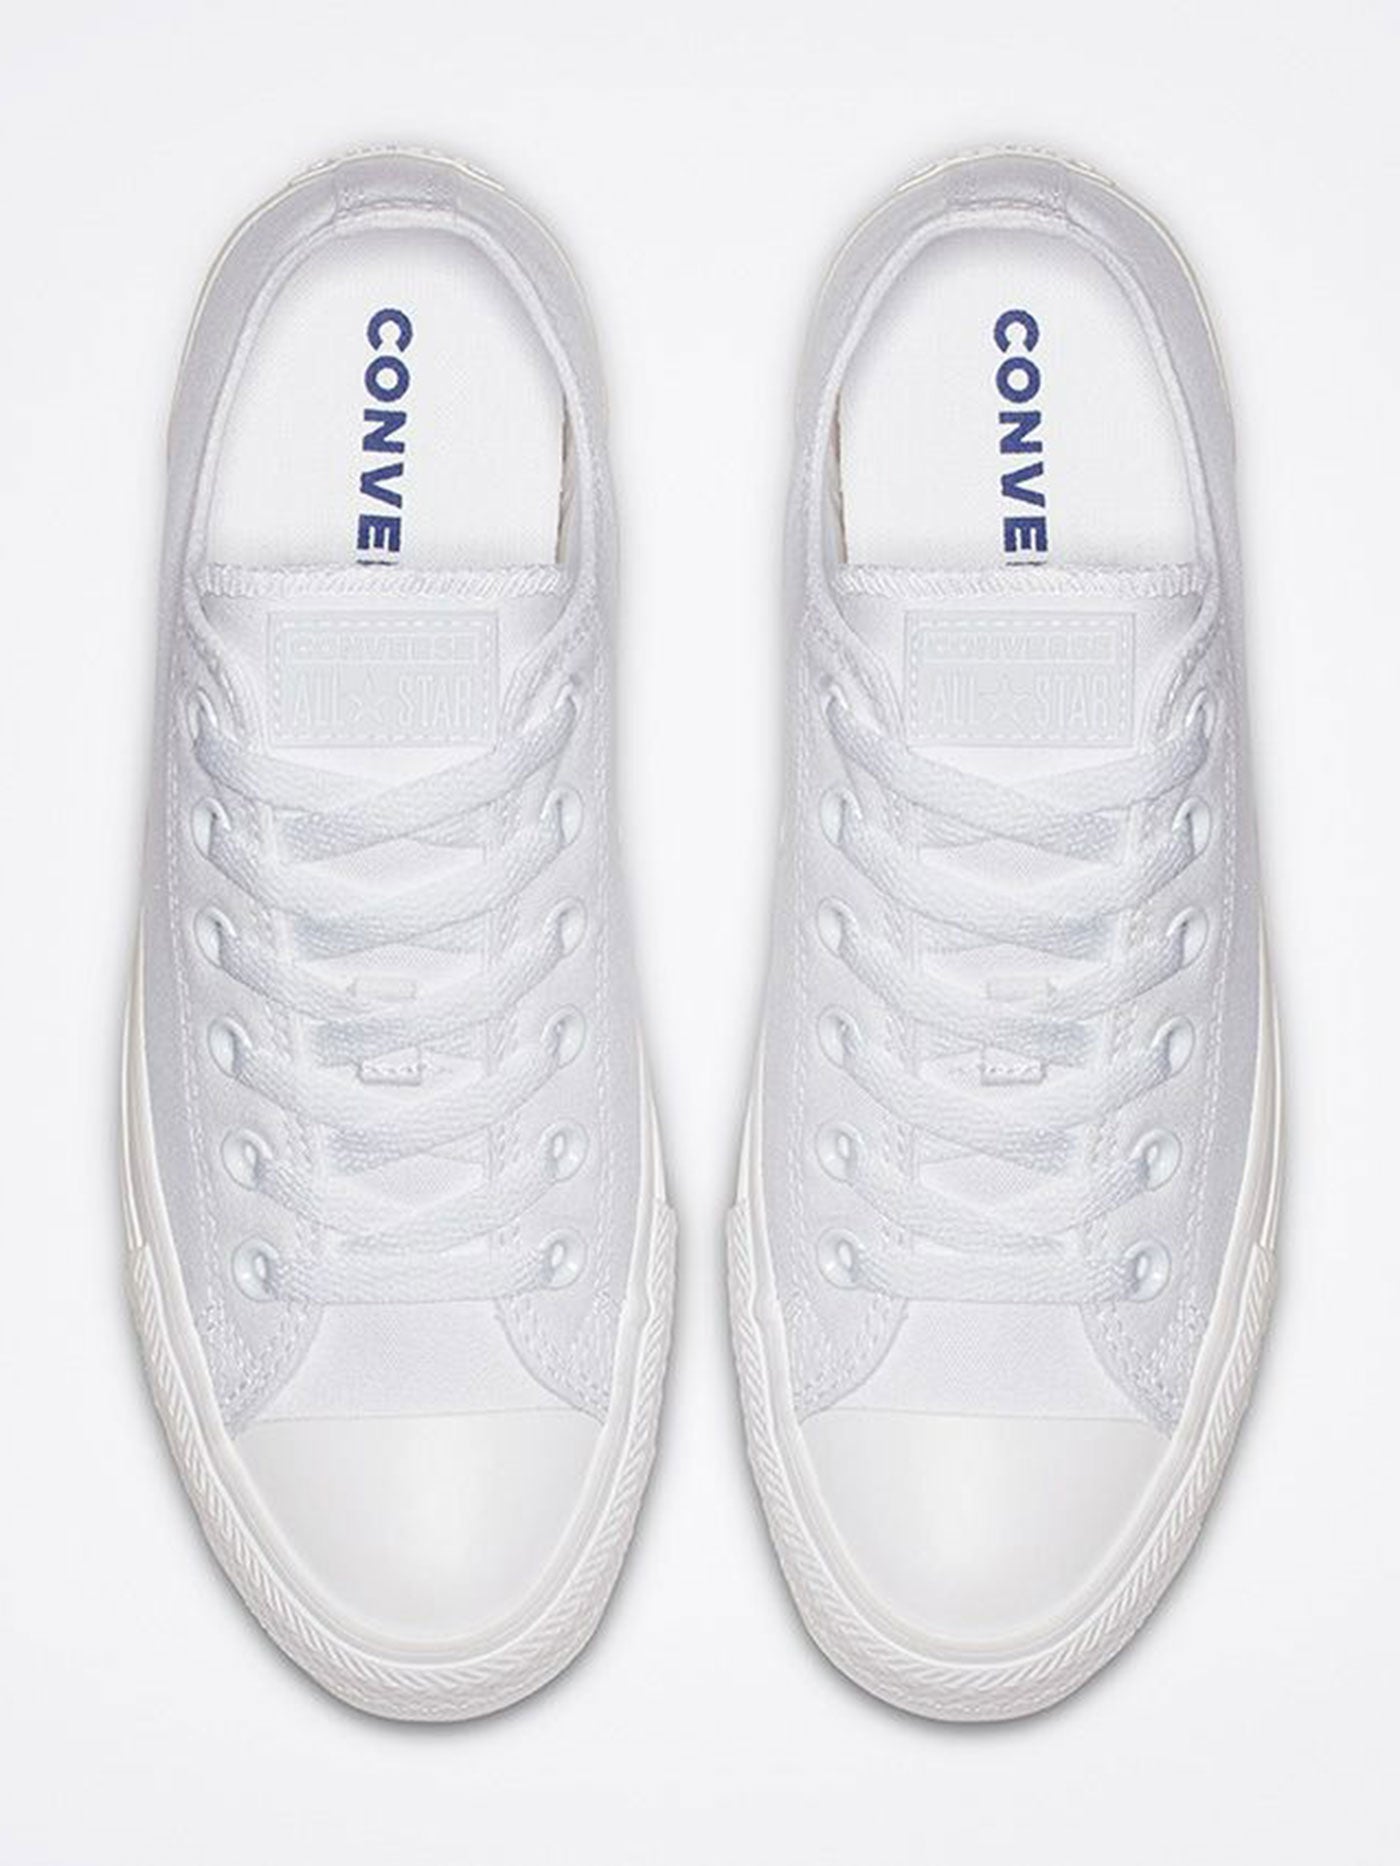 Converse Chuck Taylor AS Canvas OX White Monochrome Shoes